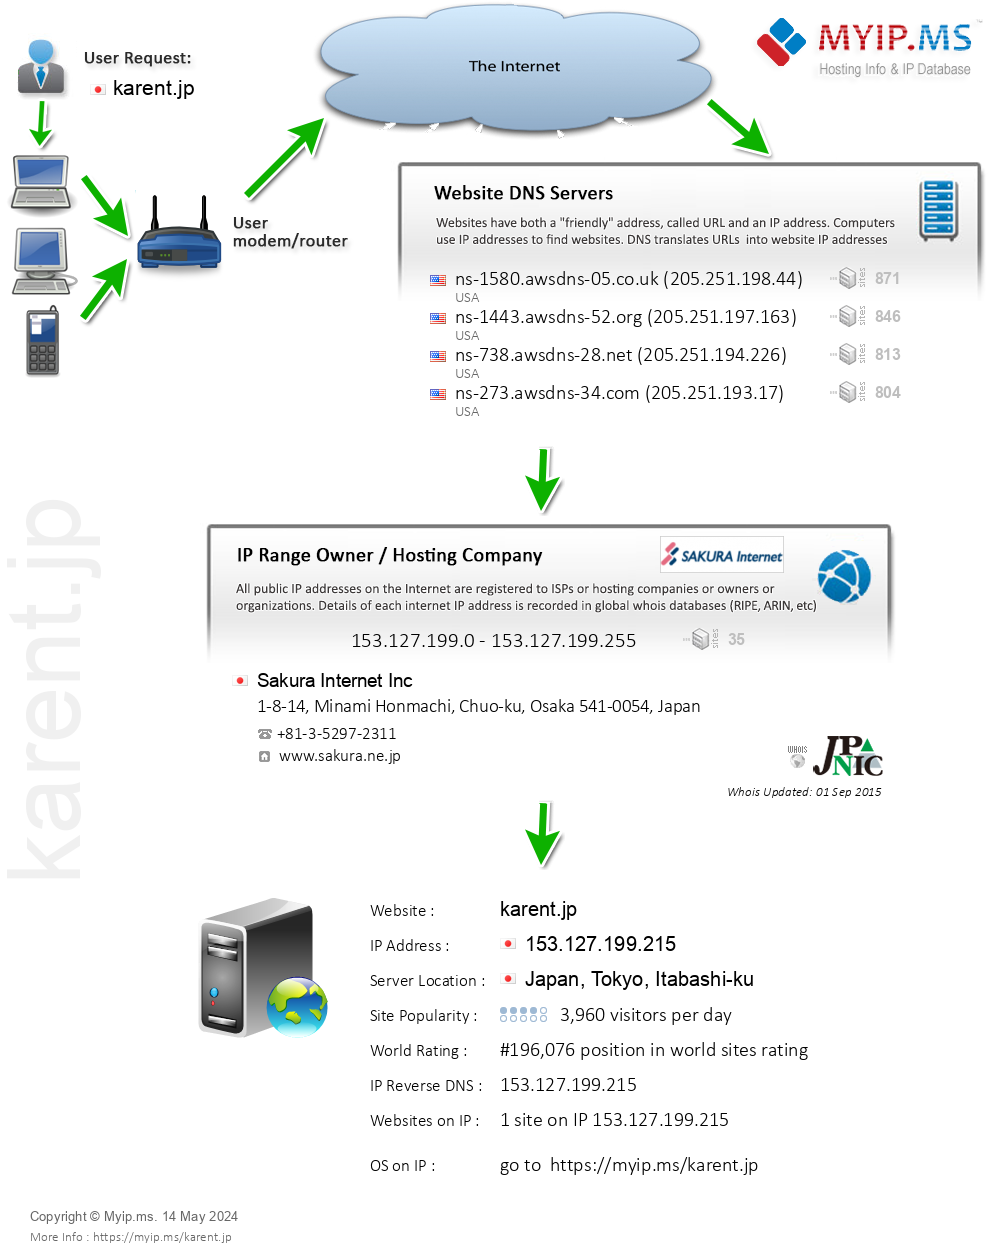 Karent.jp - Website Hosting Visual IP Diagram